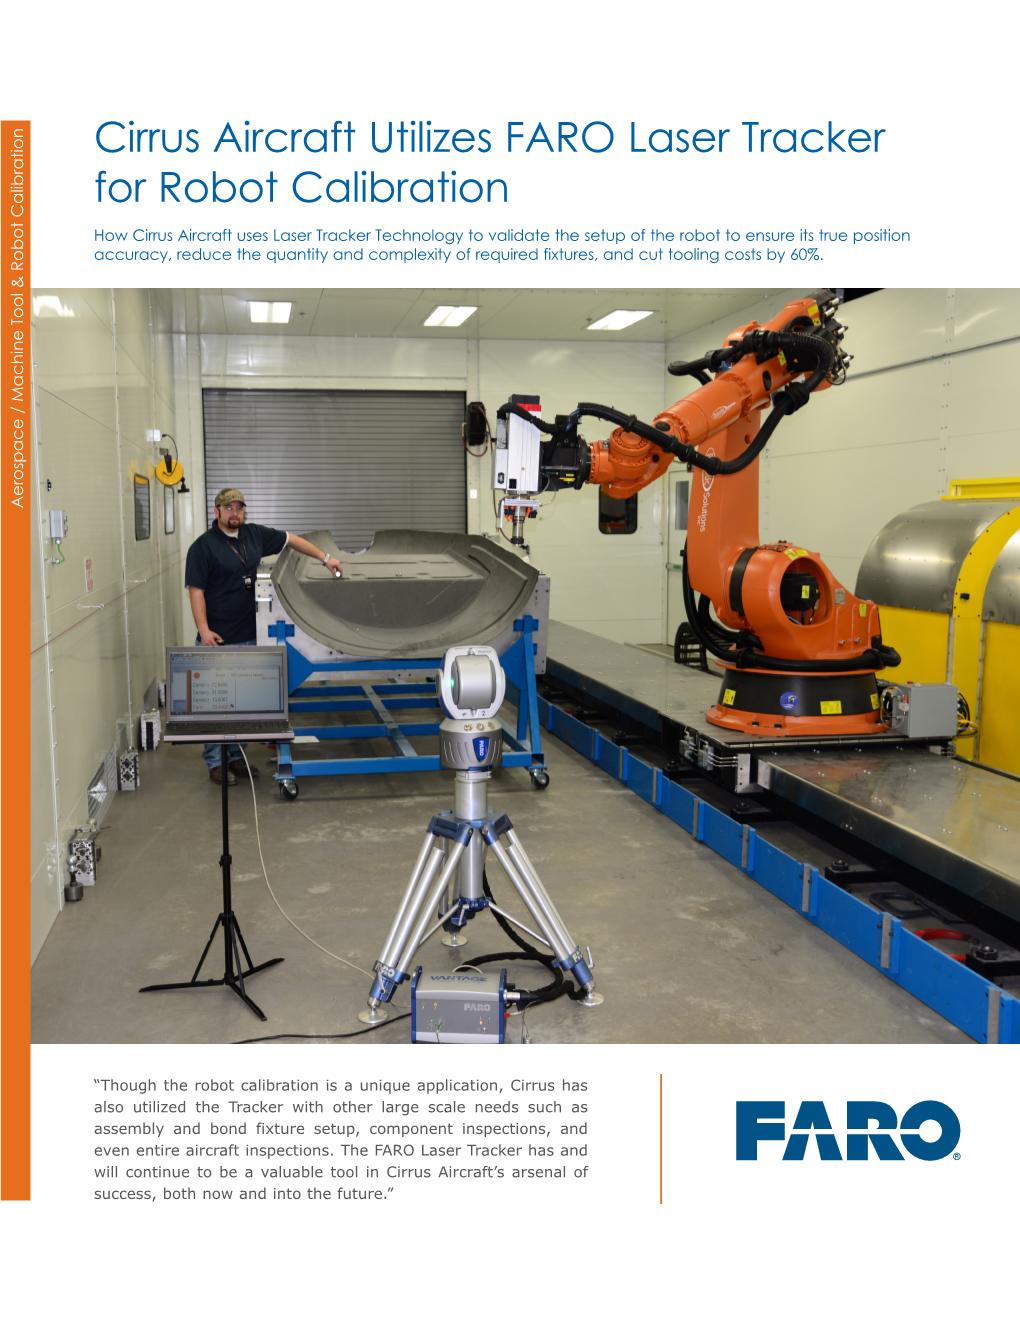 Cirrus Aircraft Utilizes FARO Laser Tracker for Robot Calibration